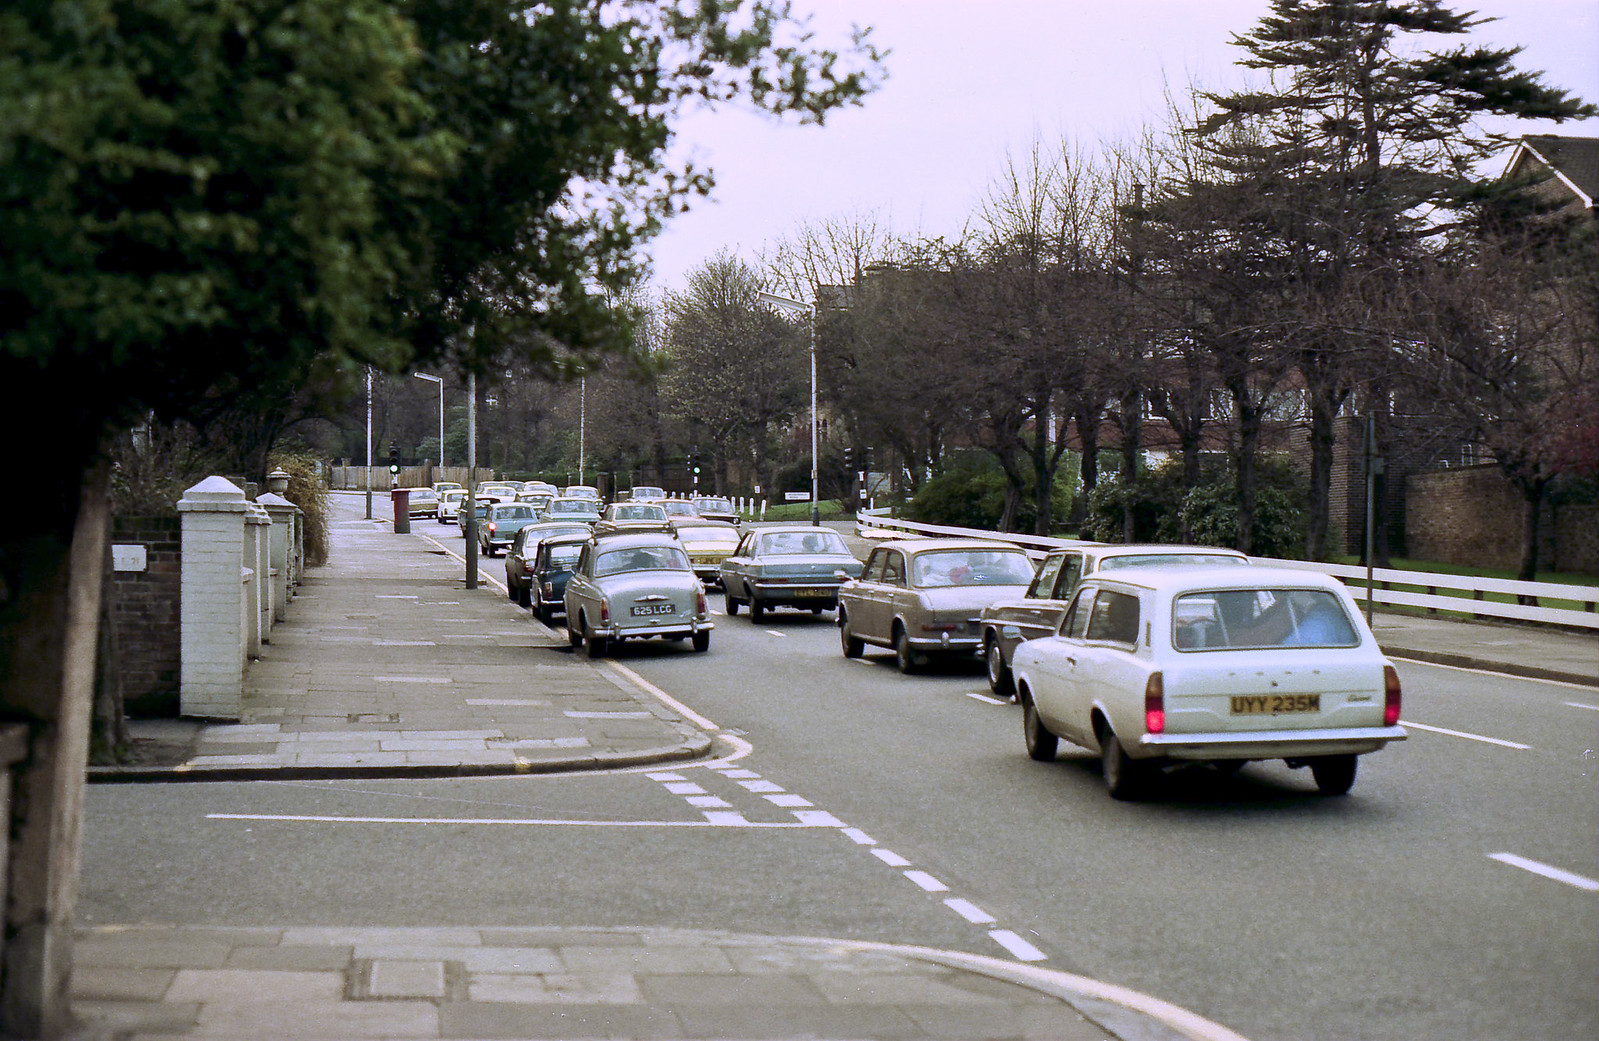 Dulwich Common, London SE21, 16th March 1975 London cars 1970s